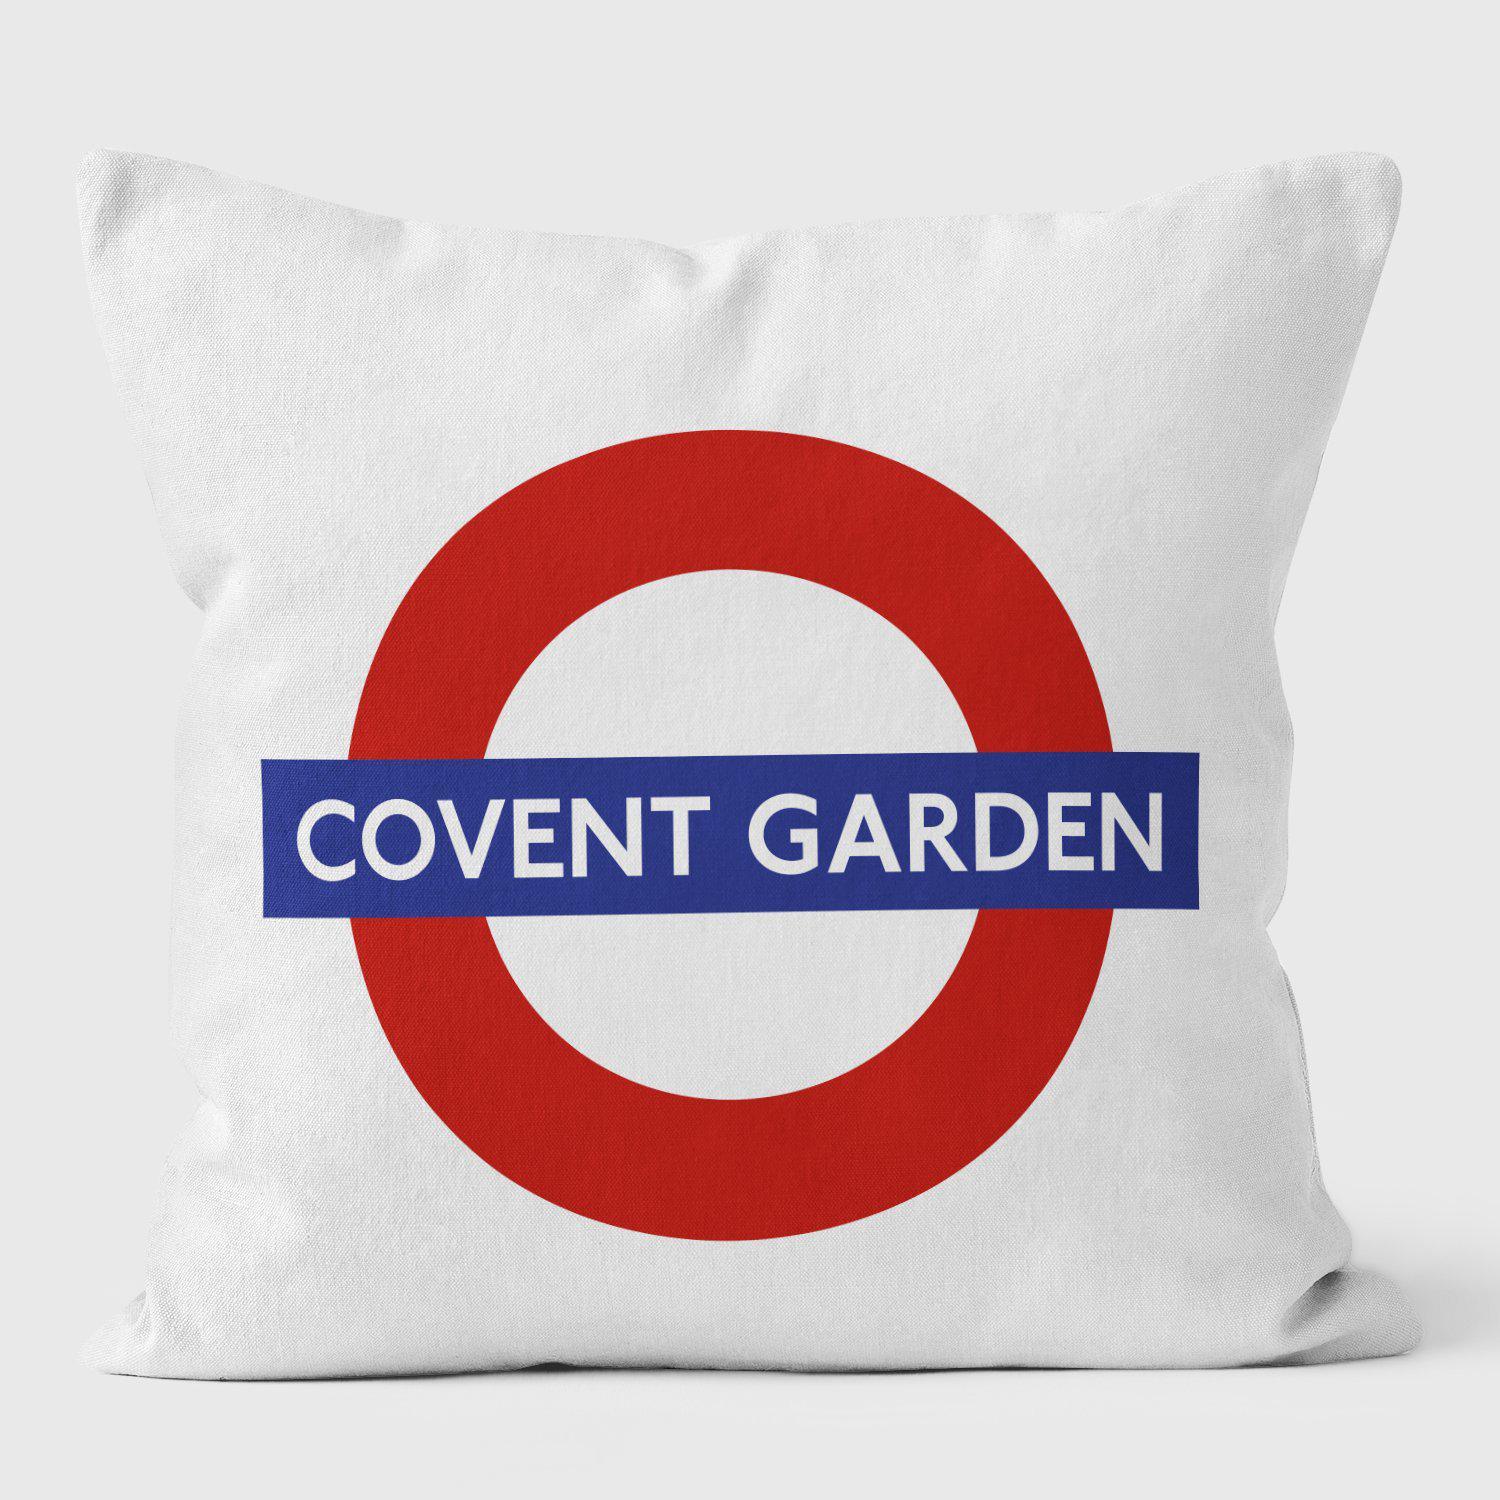 Covent Garden London Underground Tube Station Roundel Cushion - Handmade Cushions UK - WeLoveCushions